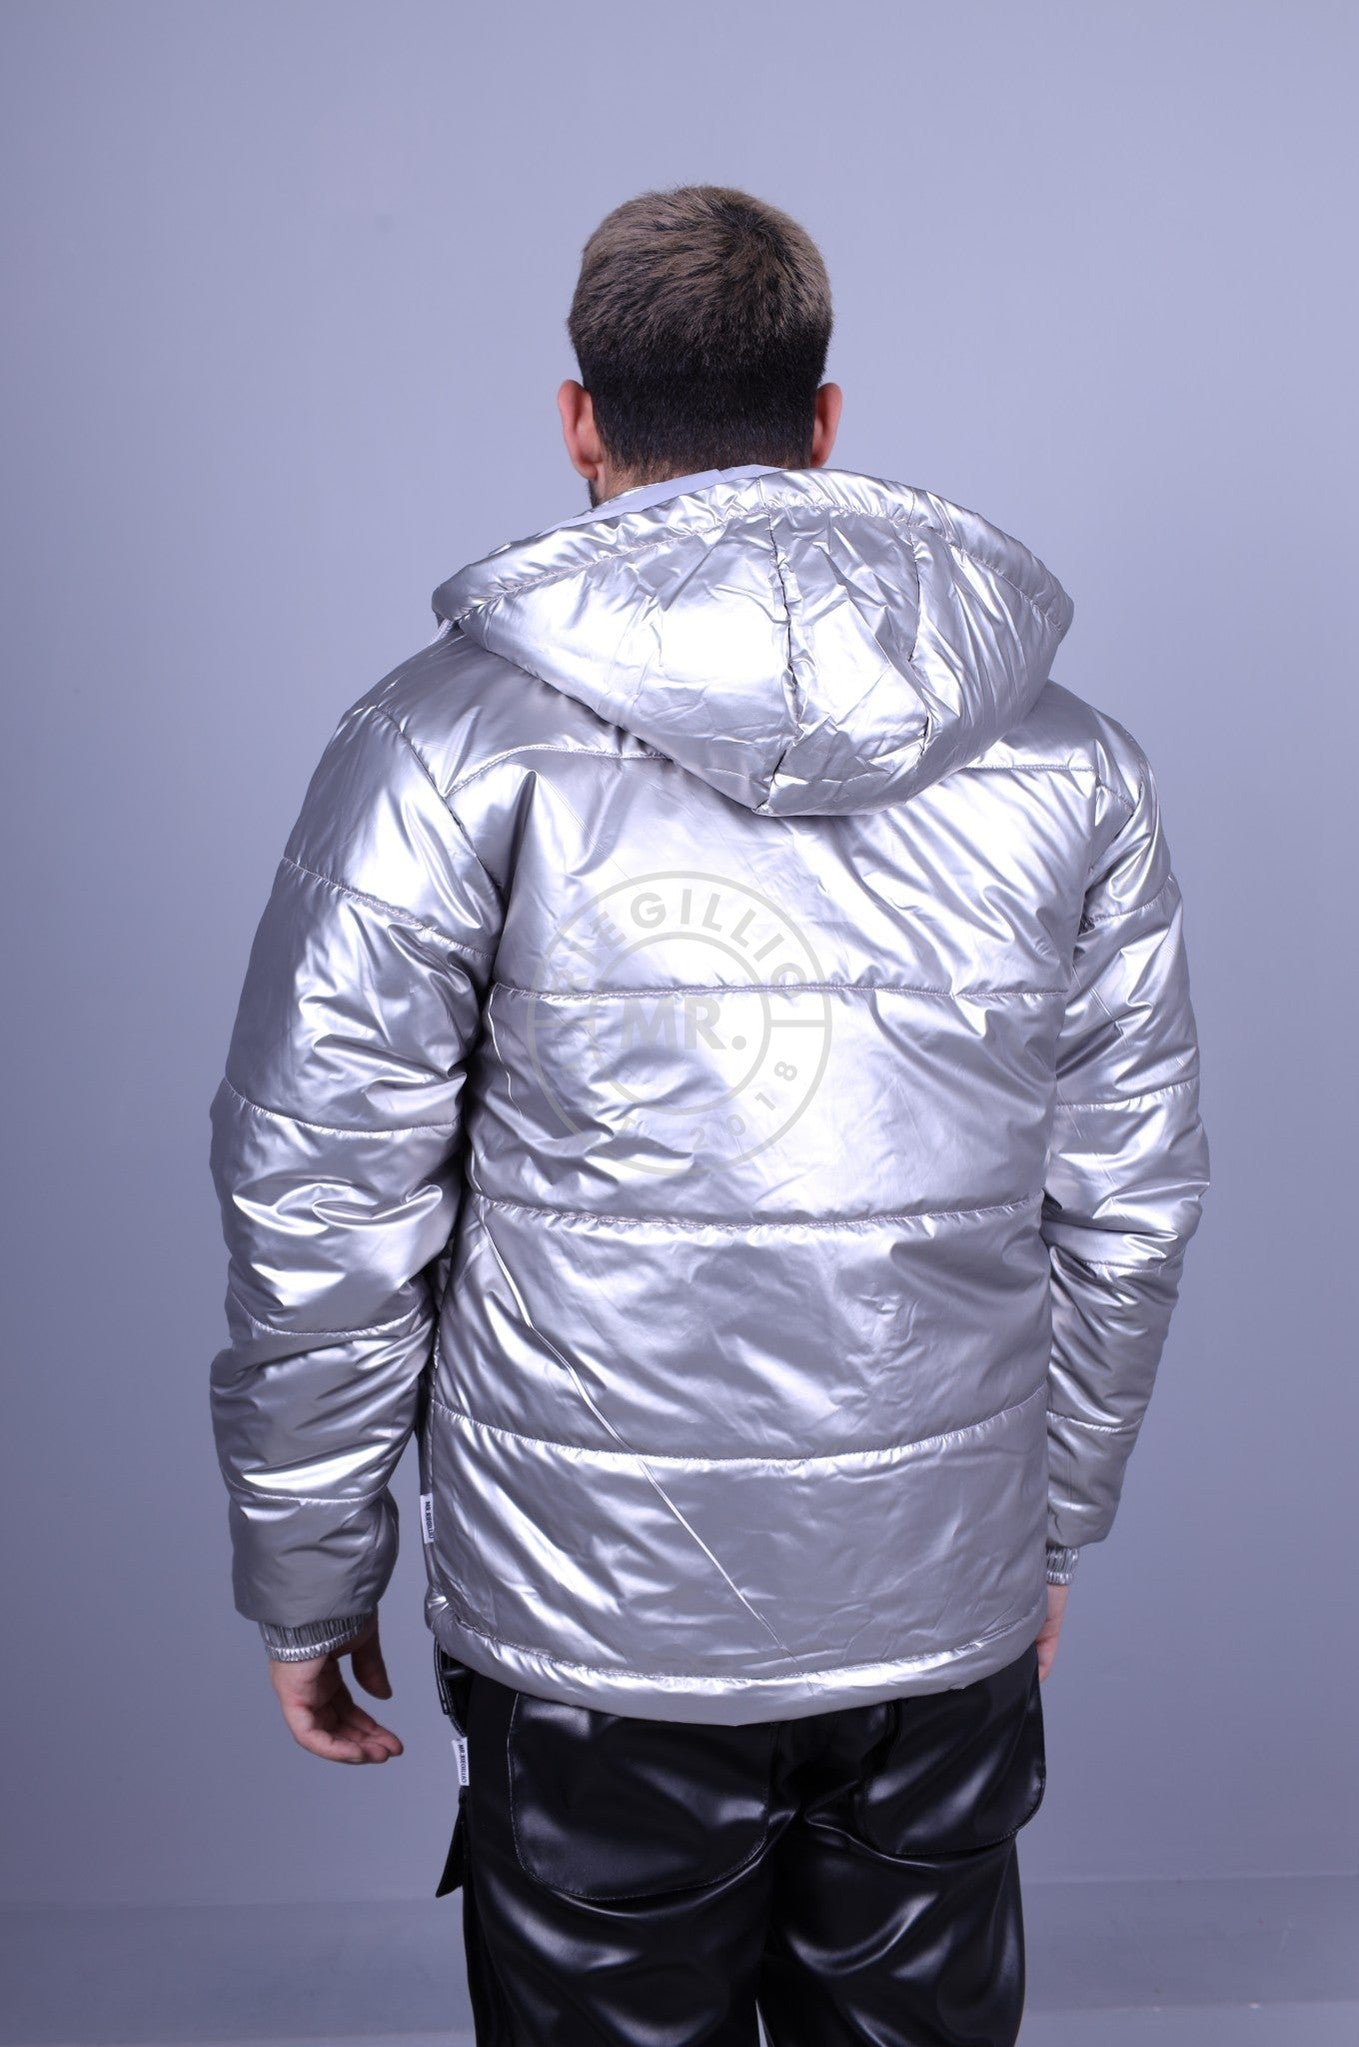 Metallic Silver Puffer Jacket Mens Hot Sale | bellvalefarms.com